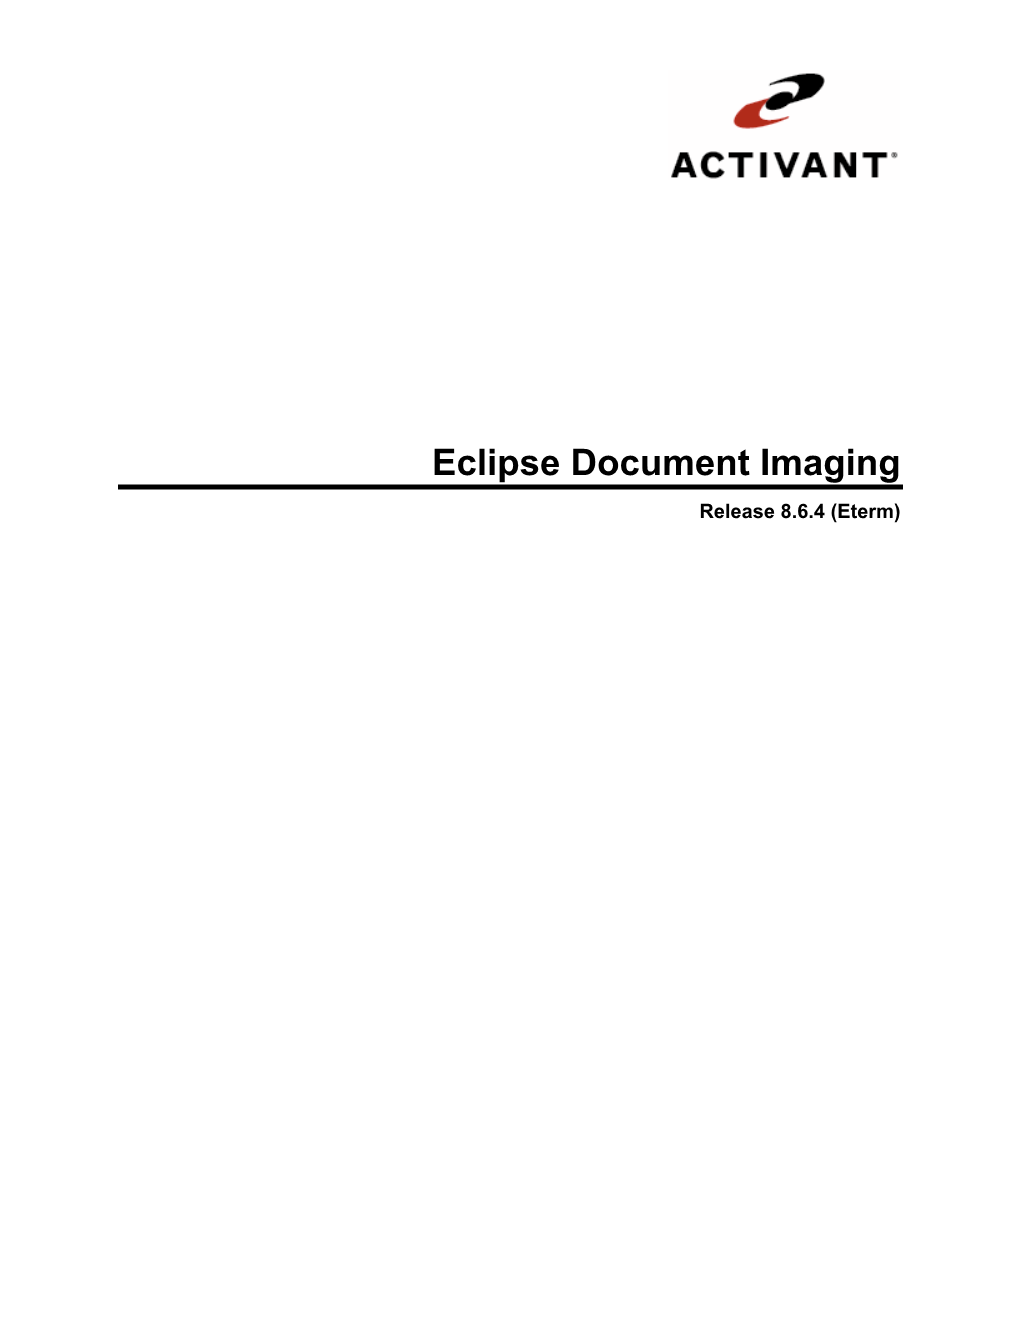 Eclipse Document Imaging Release 8.6.4 (Eterm) Legal Notices